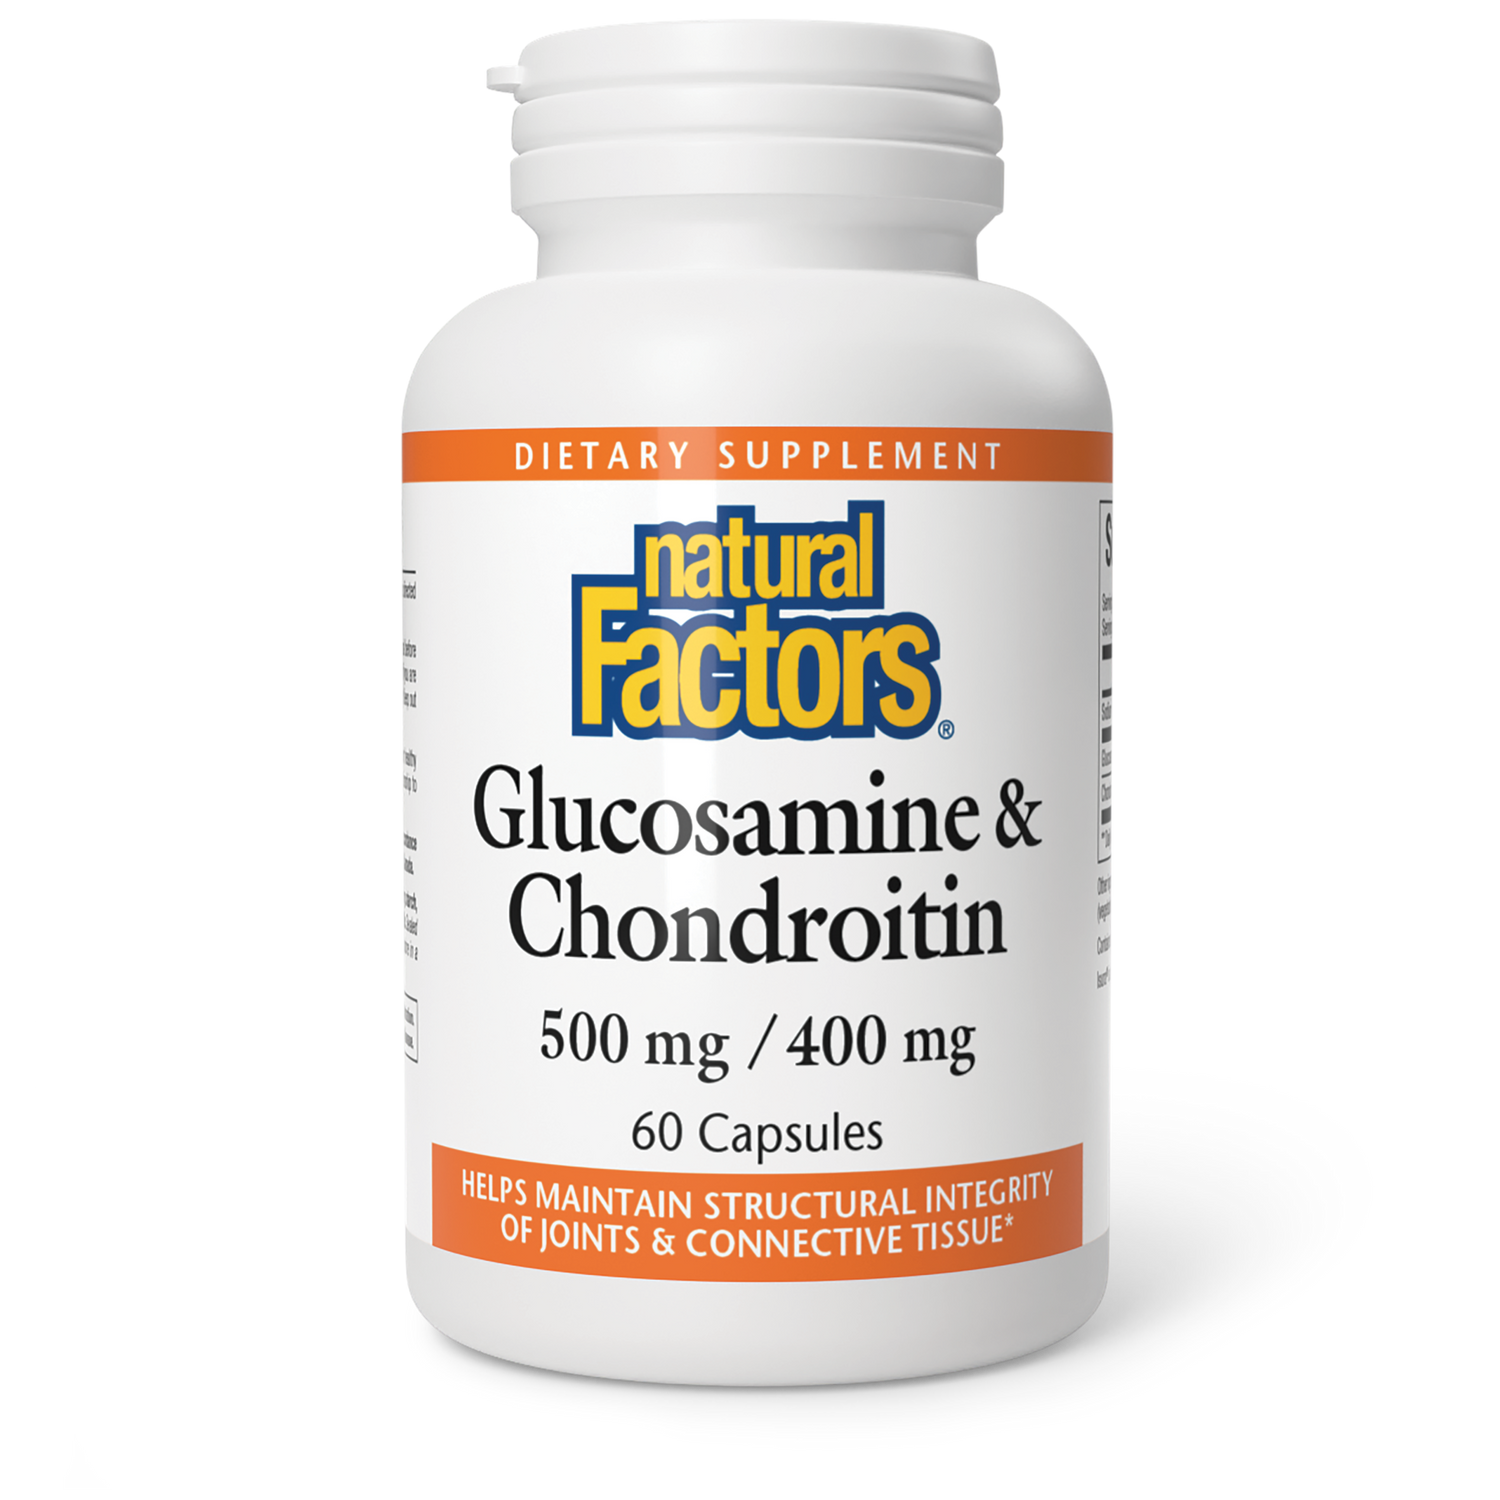 Glucosamine & Chondroitin|variant|hi-res|2686U